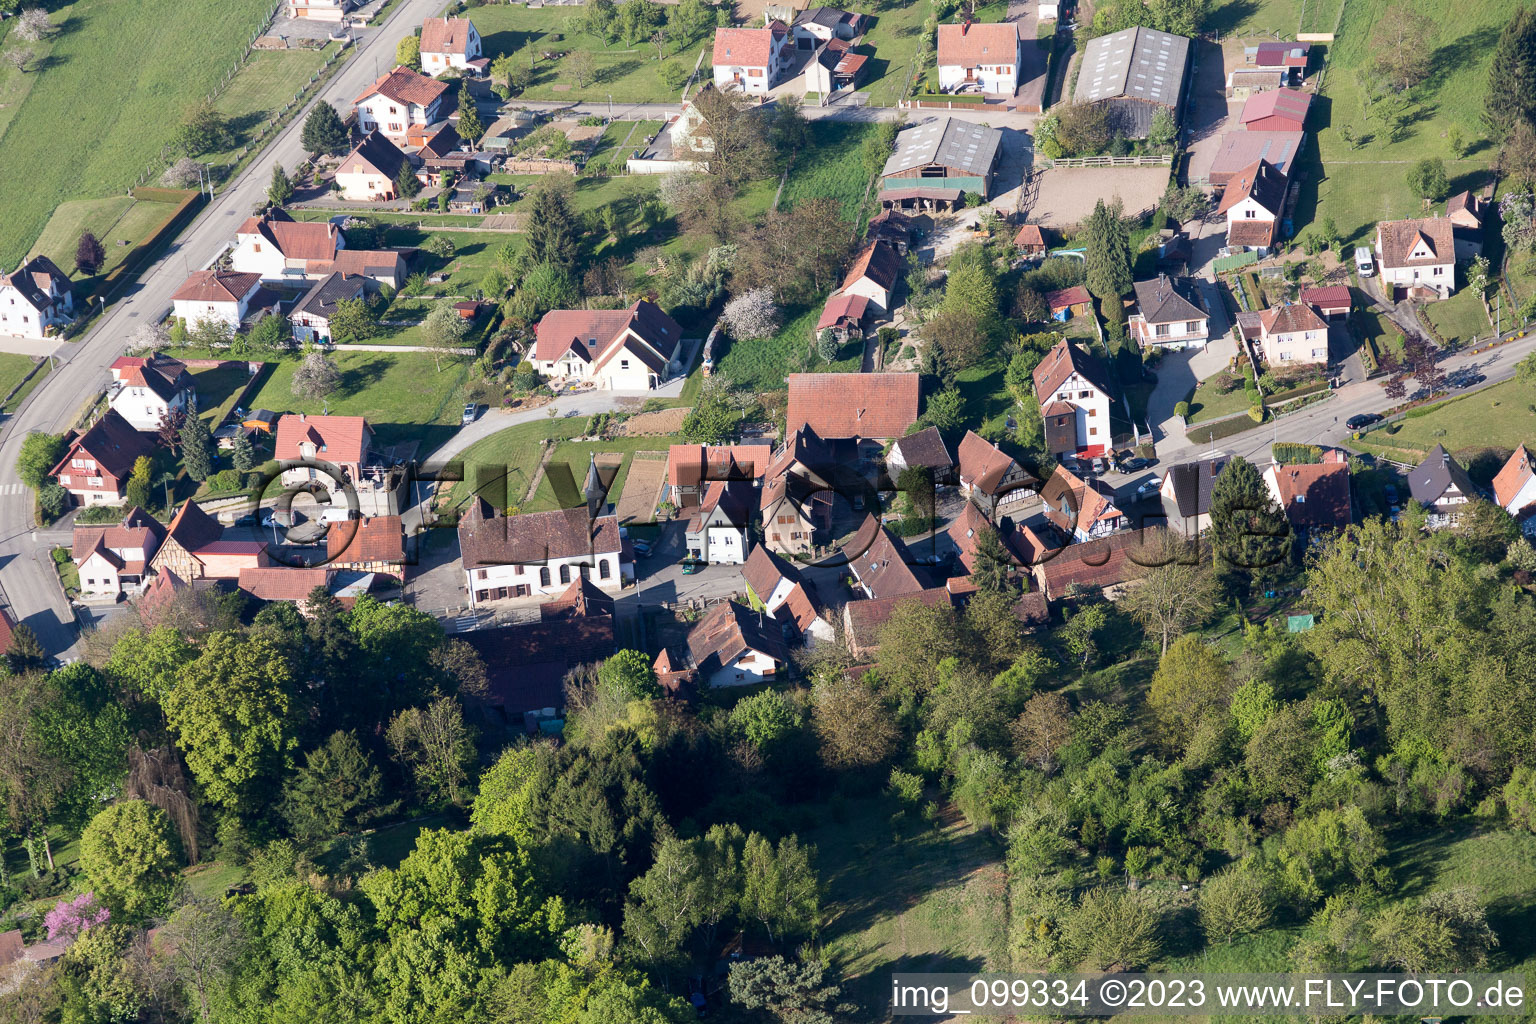 Aerial view of Lobsann in the state Bas-Rhin, France